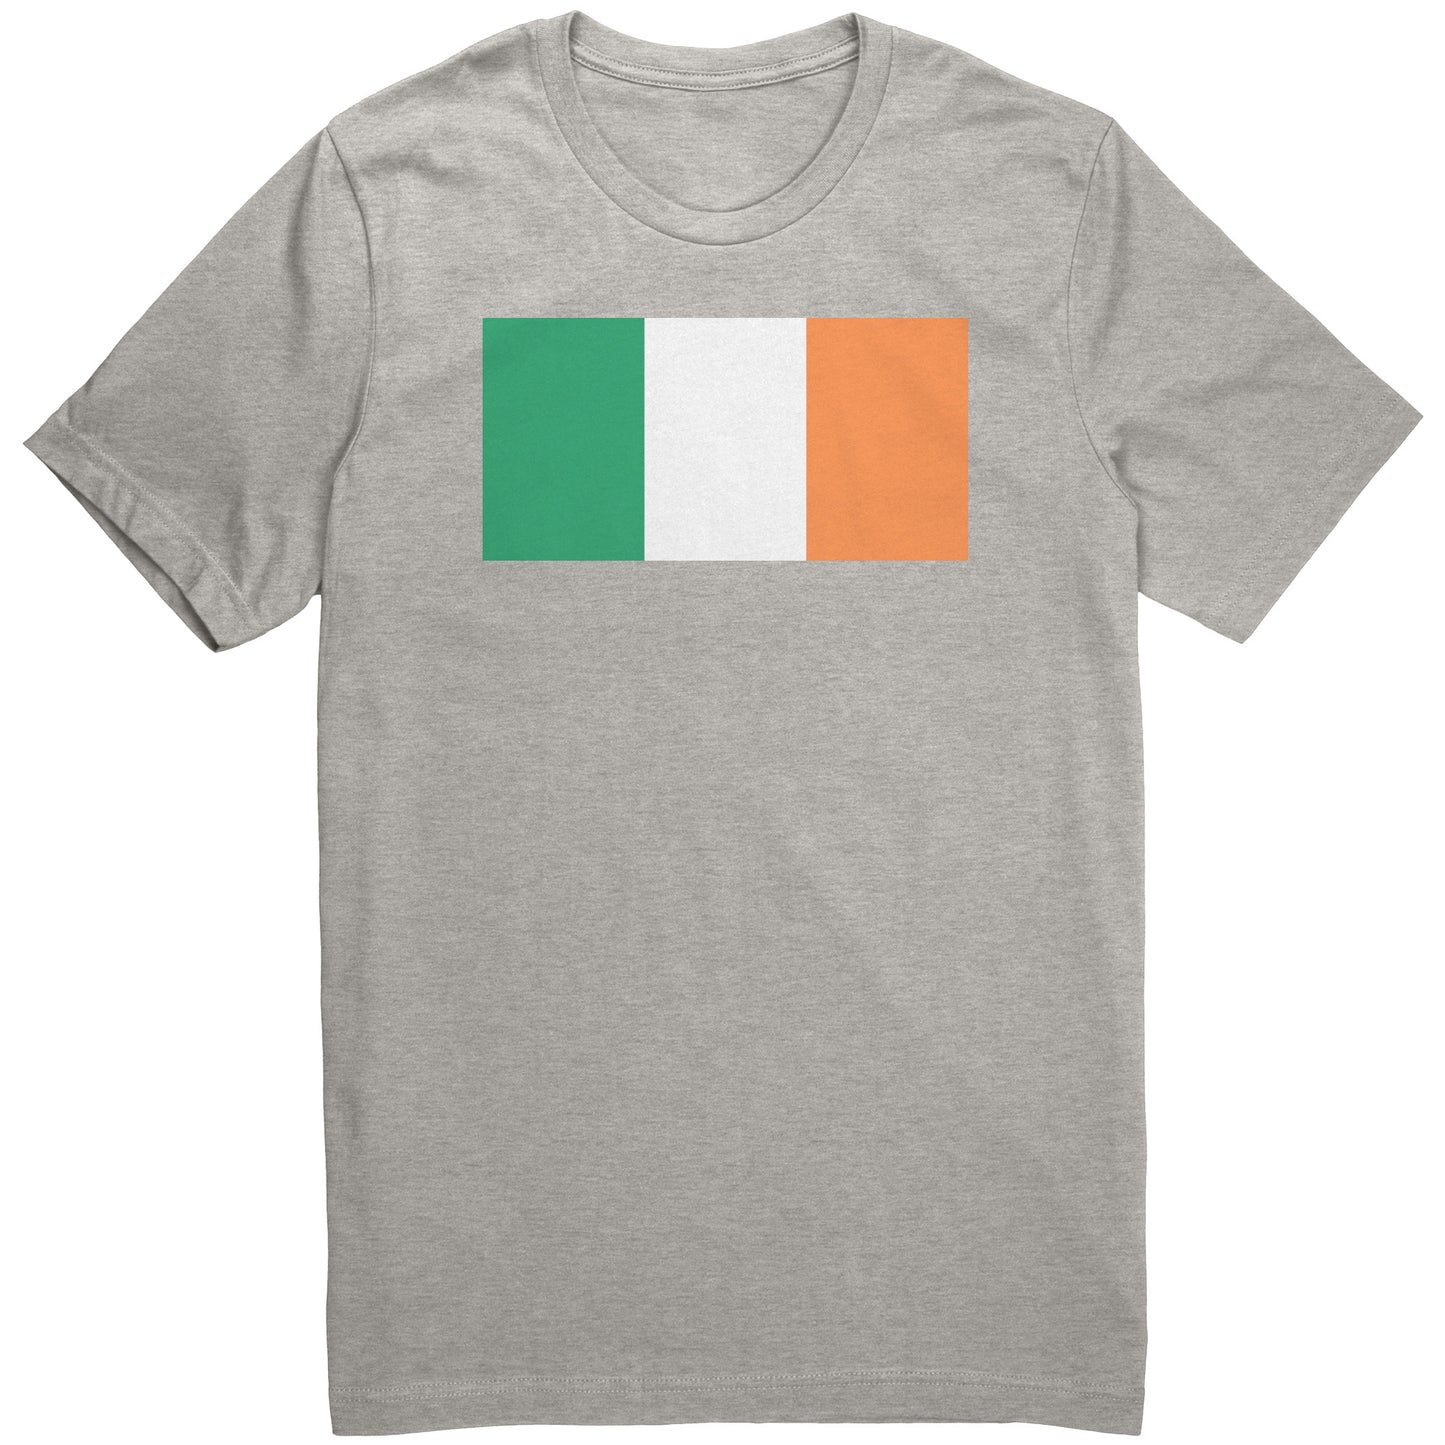 The flag Of Ireland